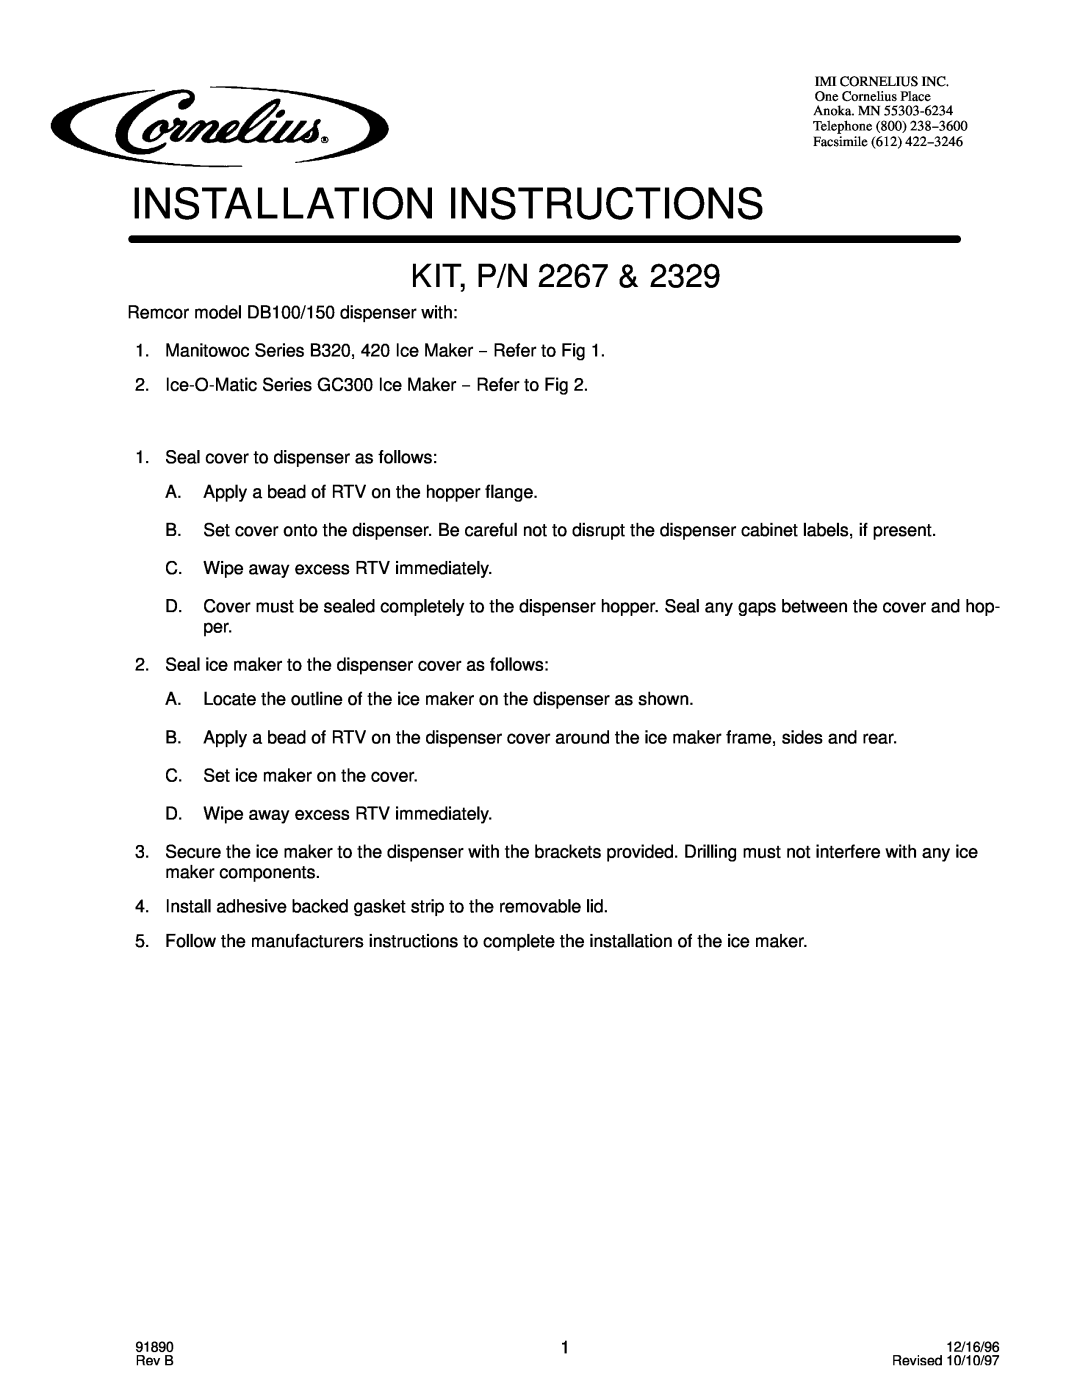 Cornelius 2267 installation instructions Installation Instructions, Kit, P/N 